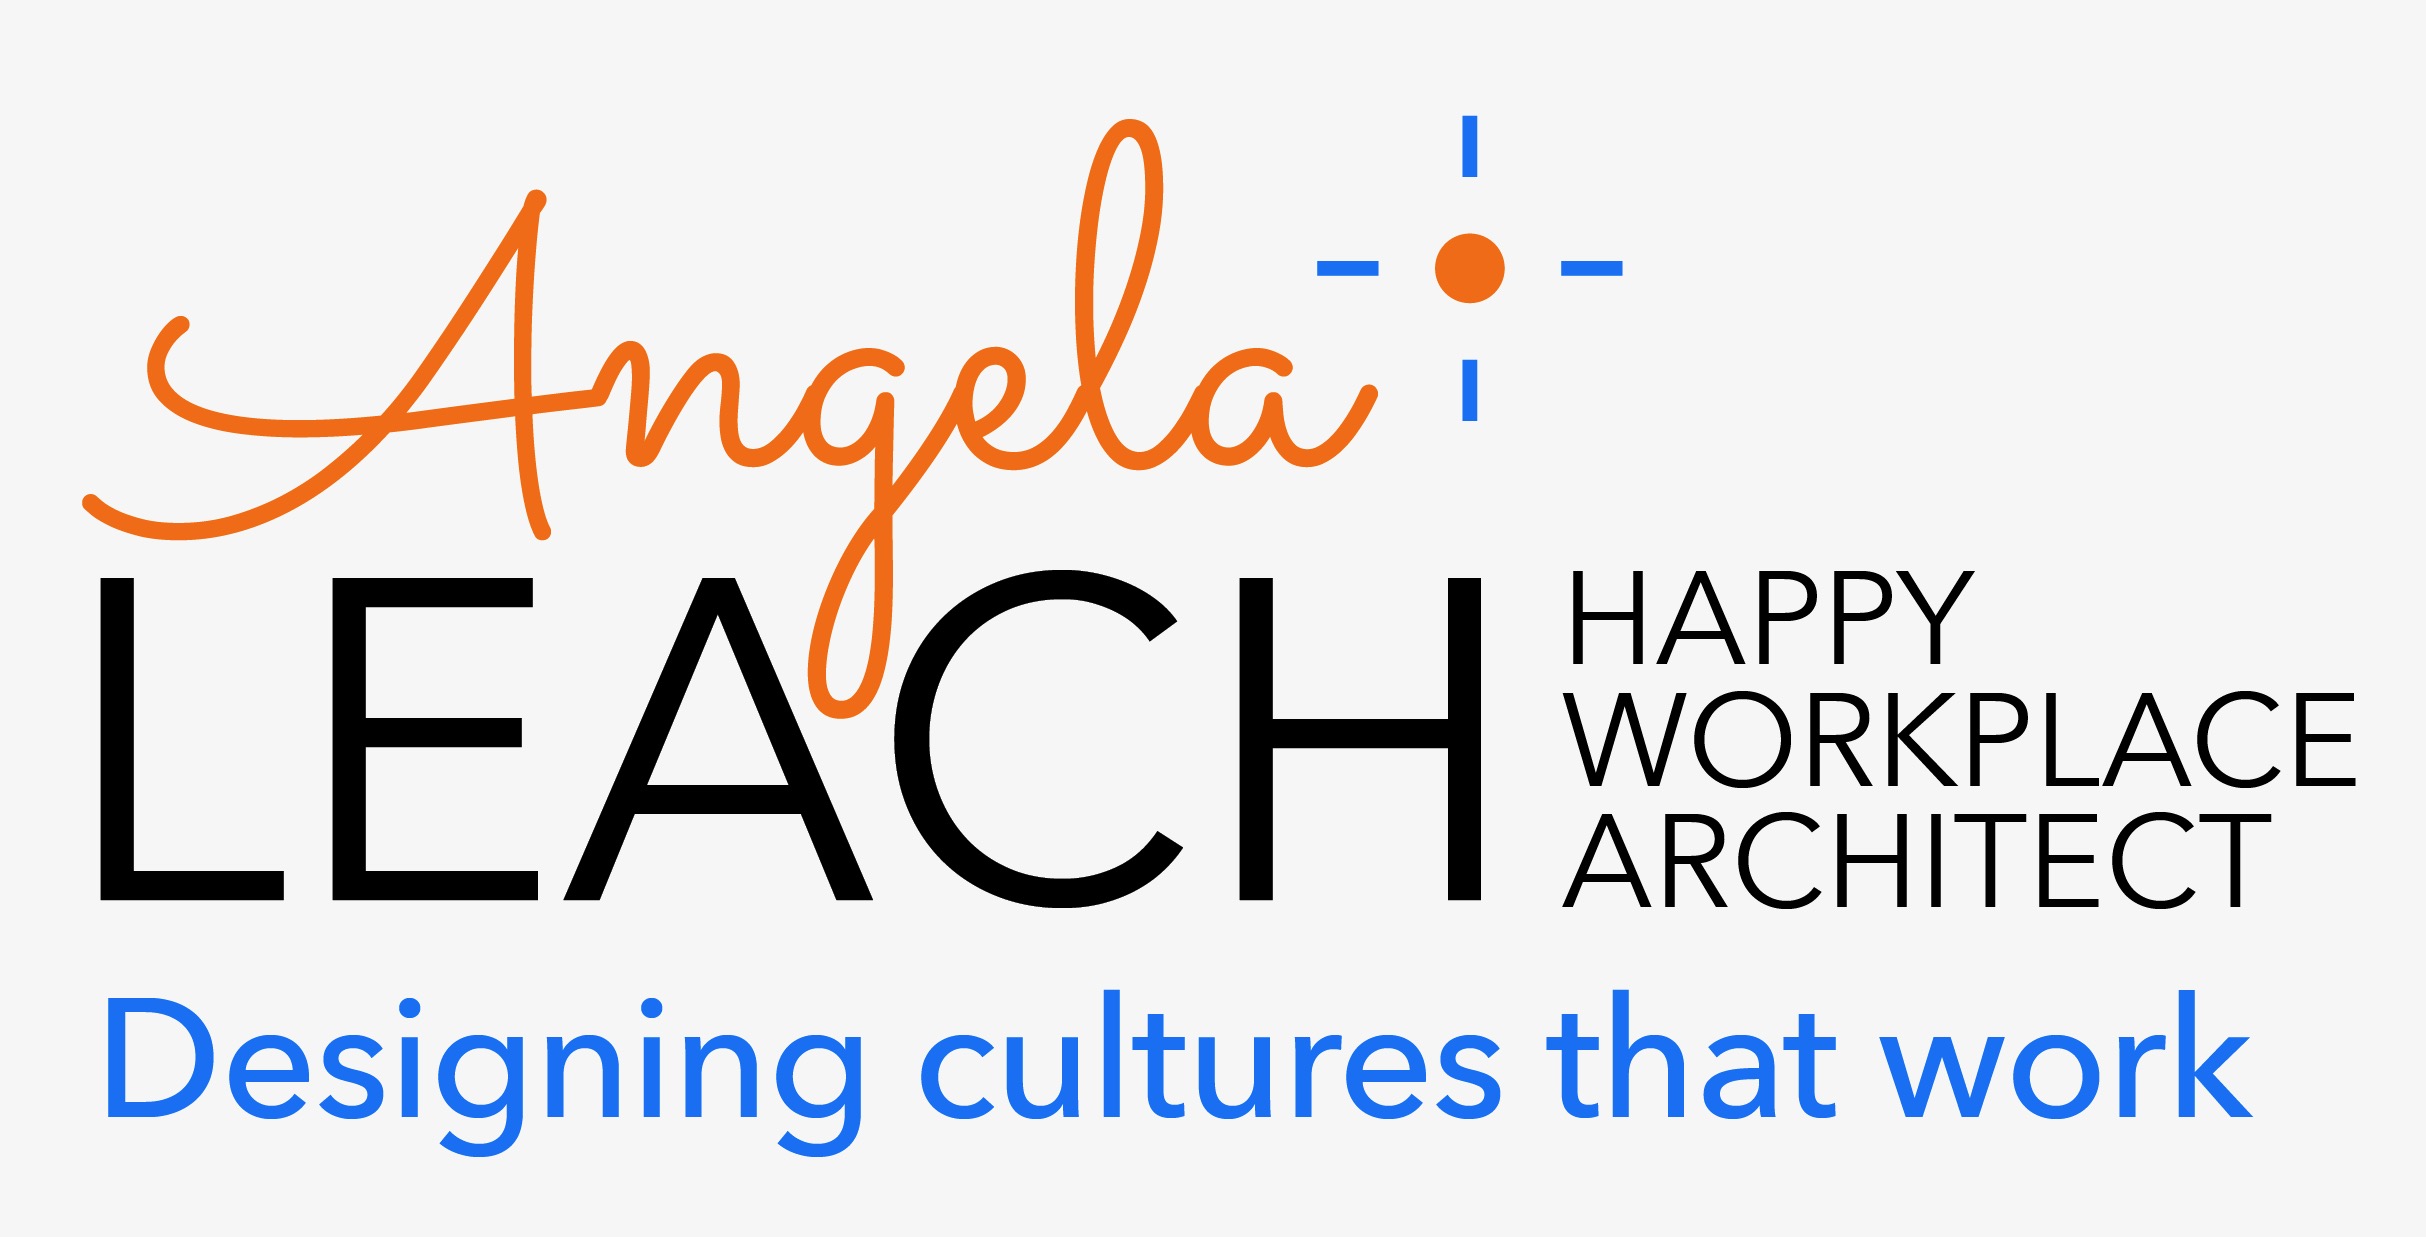 Angela Leach - Happy Workplace Architect